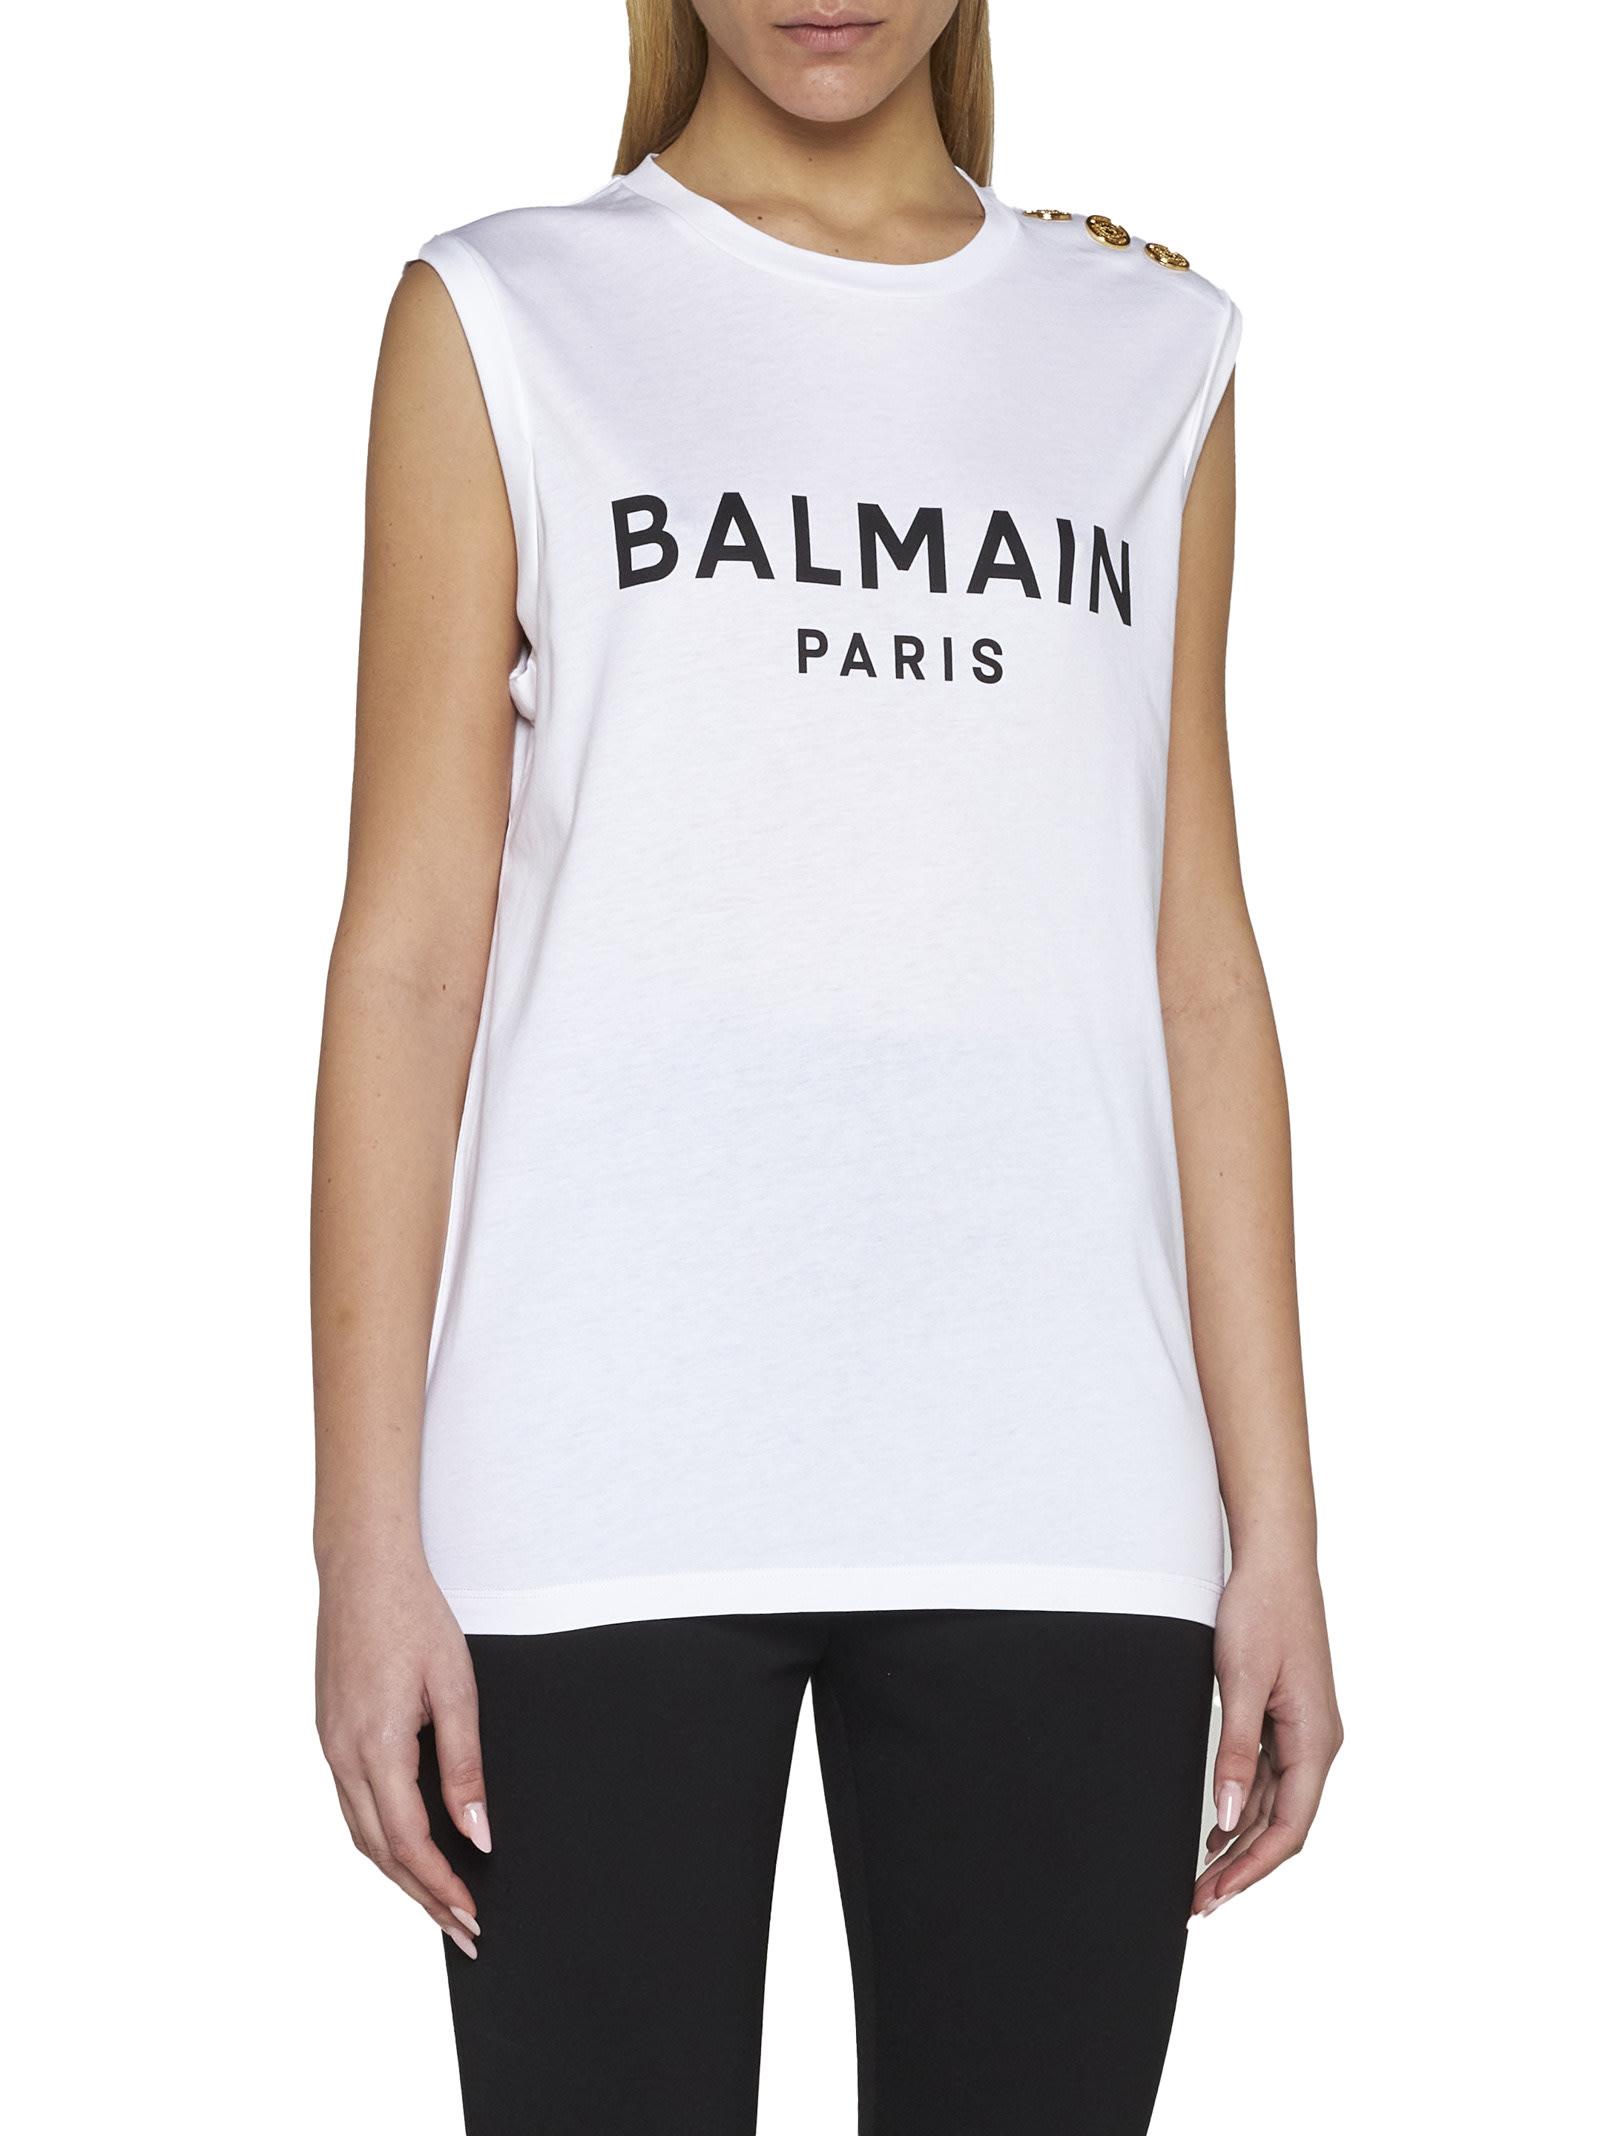 Balmain T-shirt in White | Lyst